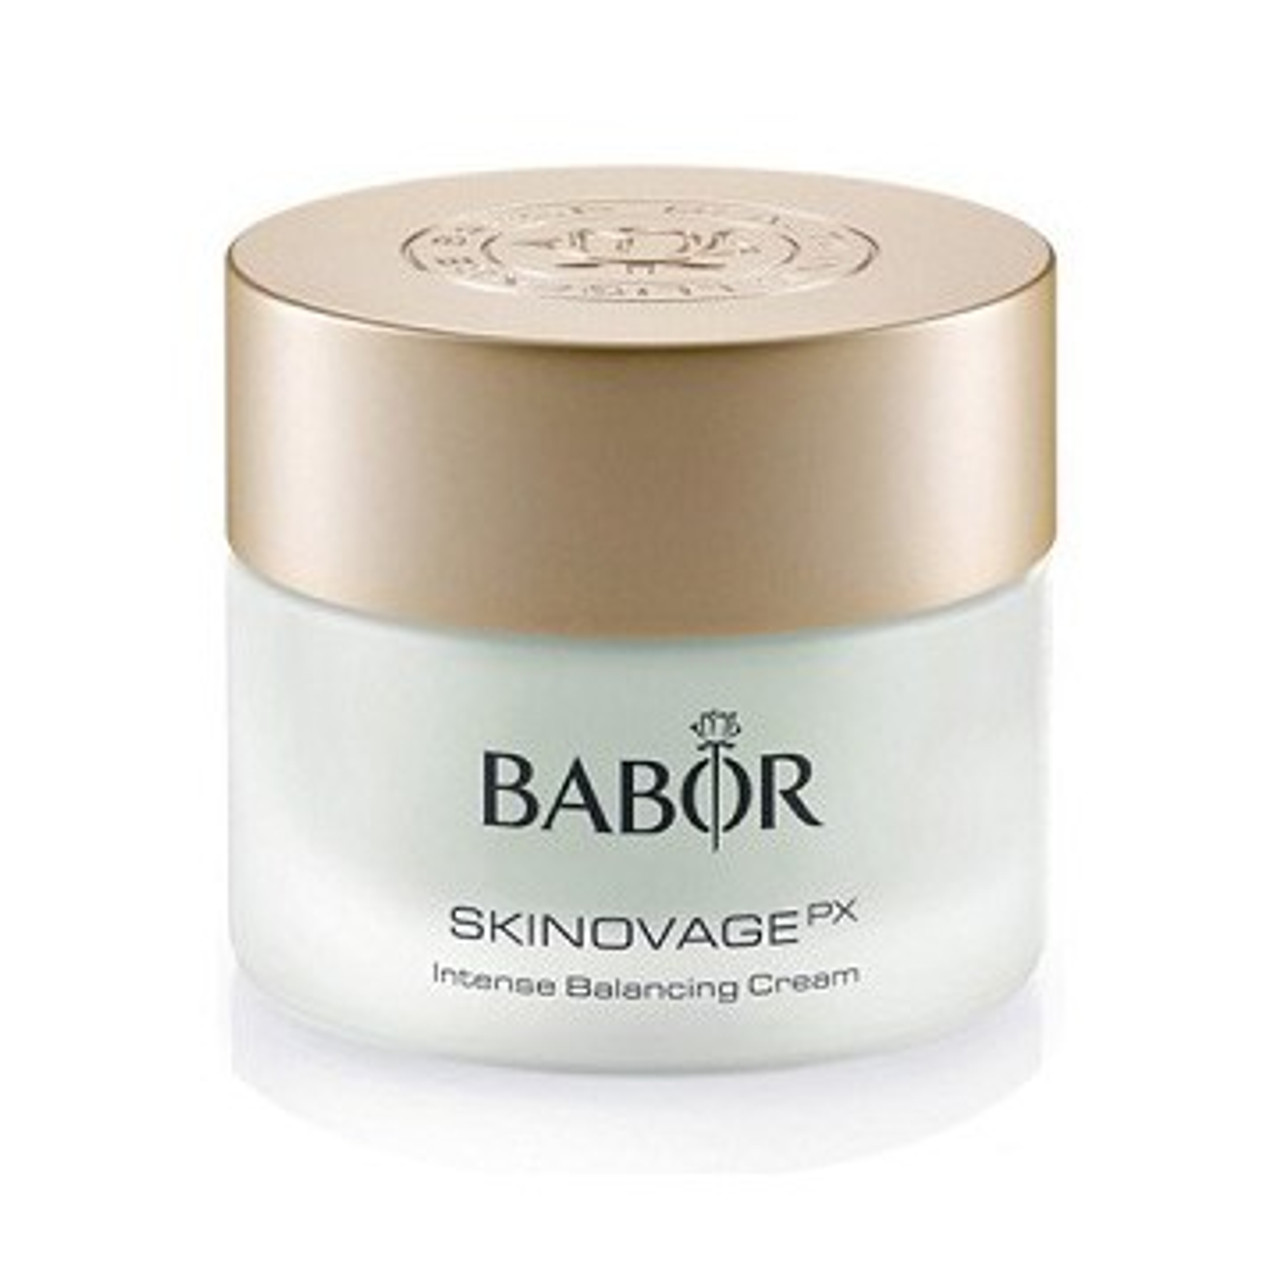 Babor Skinovage PX Perfect Combination Intense Balancing Cream - 1 3/4 oz (472400)